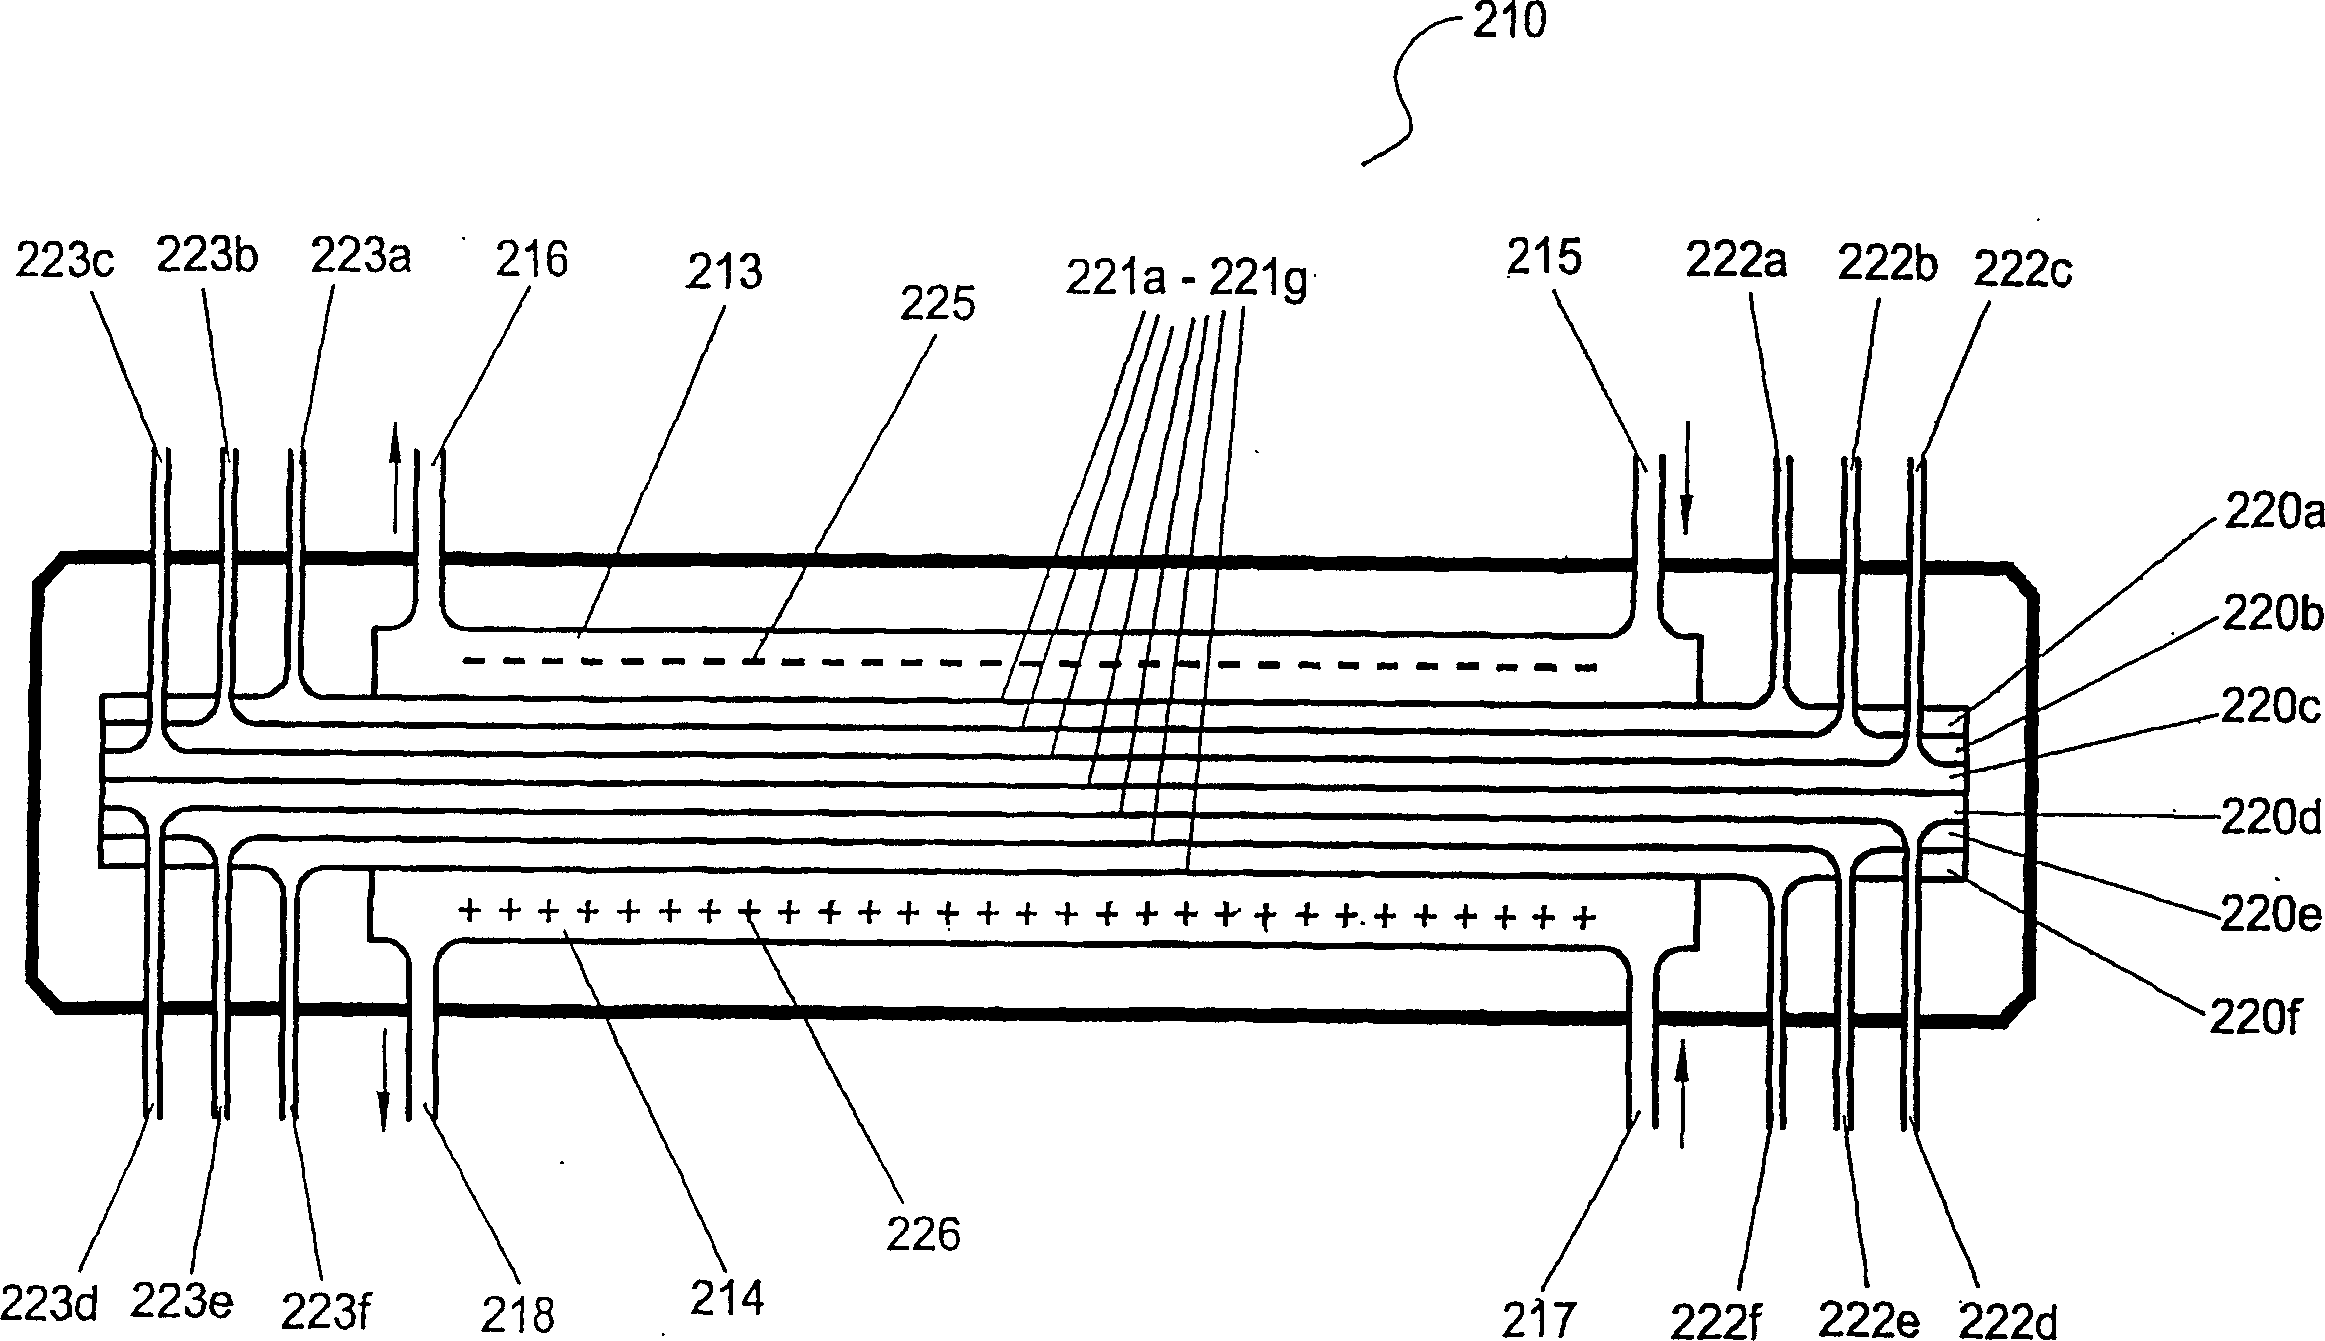 Multi-port separation apparatus and method